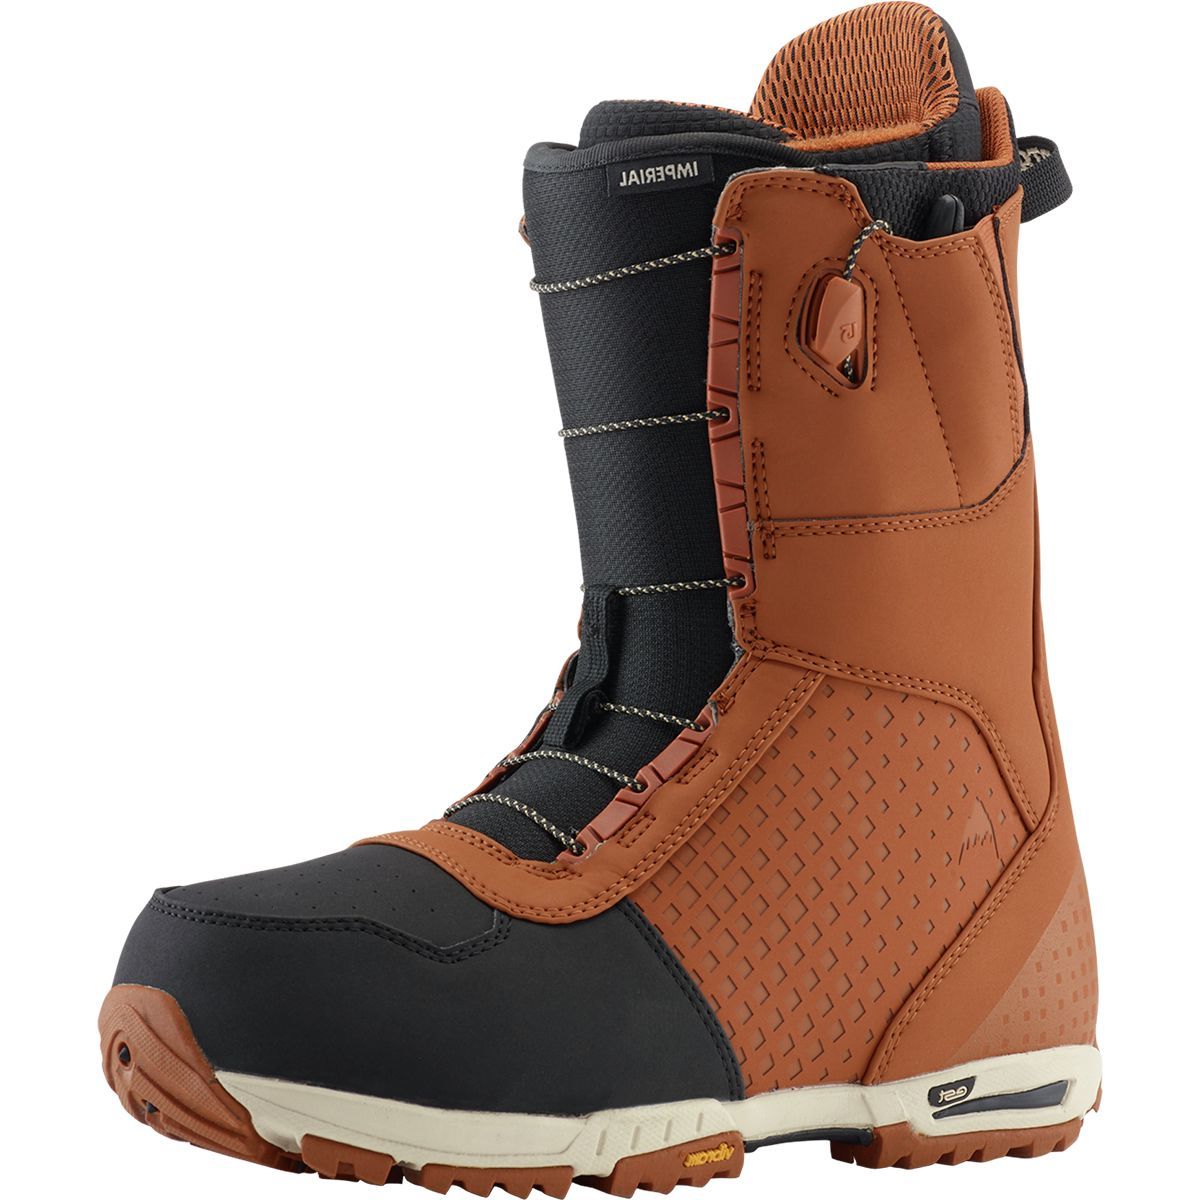 Burton Imperial Snowboard Boot - Men's